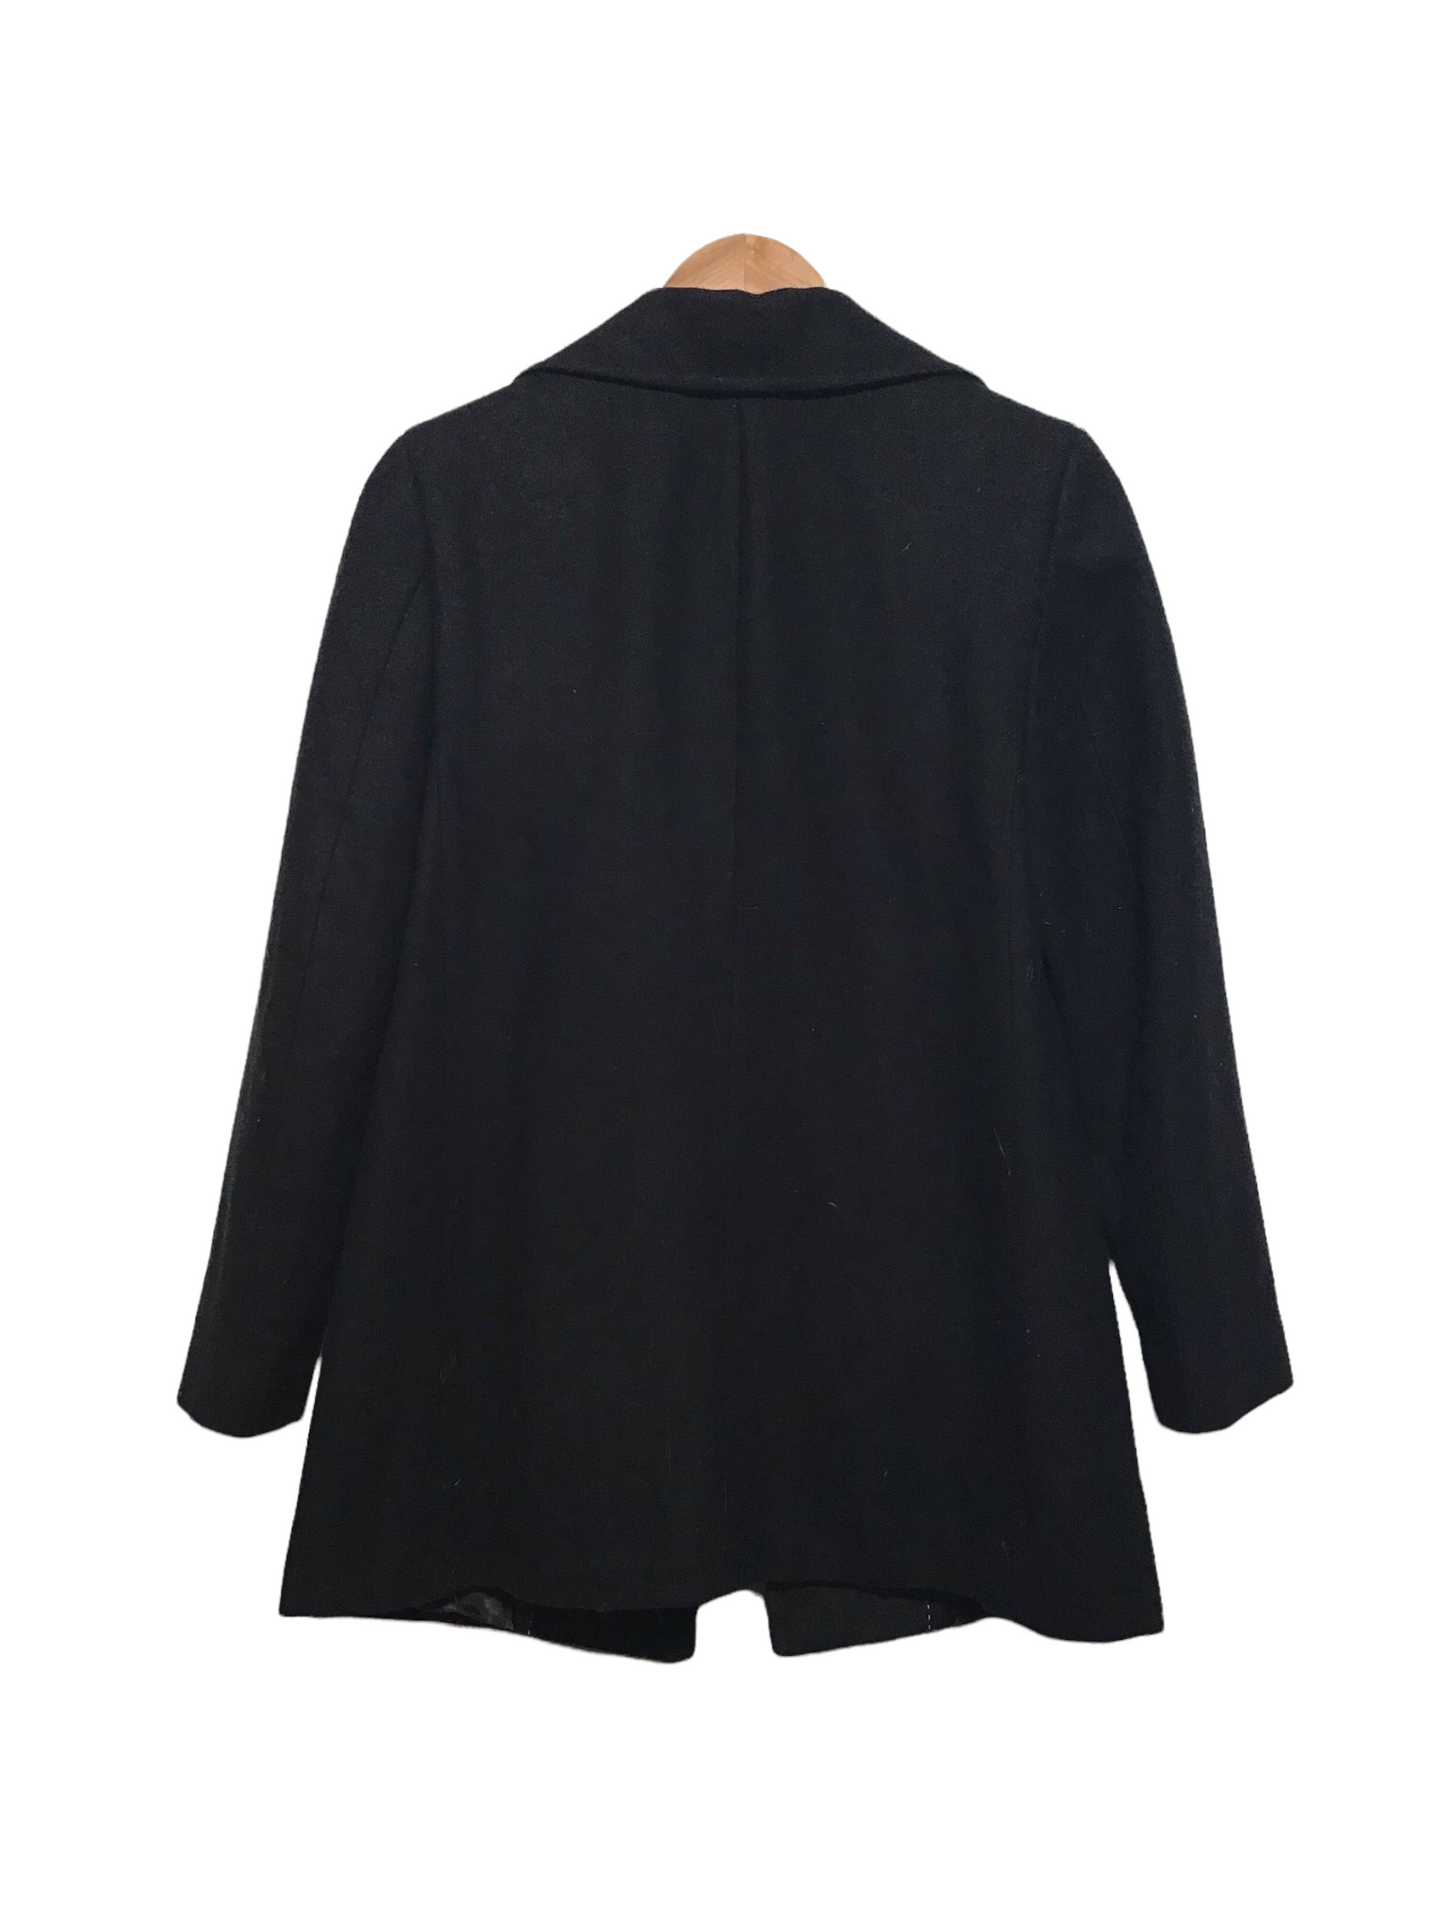 Women’s Black Lined Coat (Size S/M)